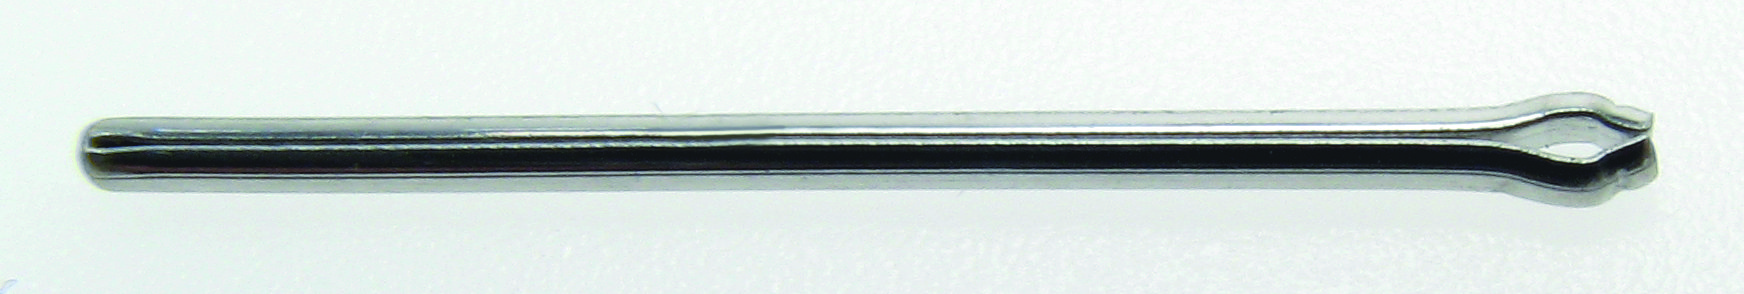 Bandsplinte Sortiment Edelstahl Länge 10,00-20,00mm Ø 0,80-1,00mm gespalten, Inhalt 500 Stk.